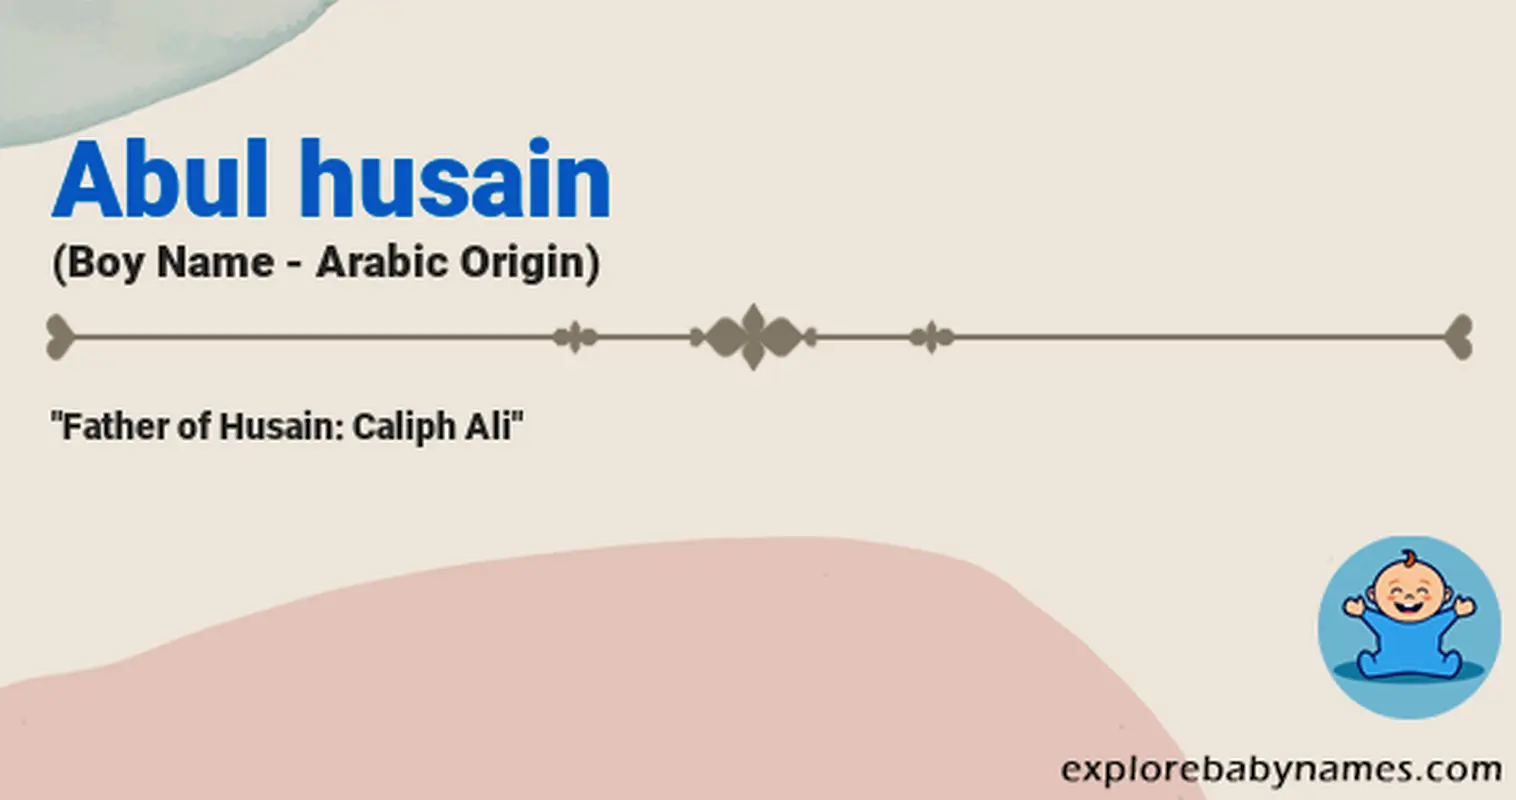 Meaning of Abul husain